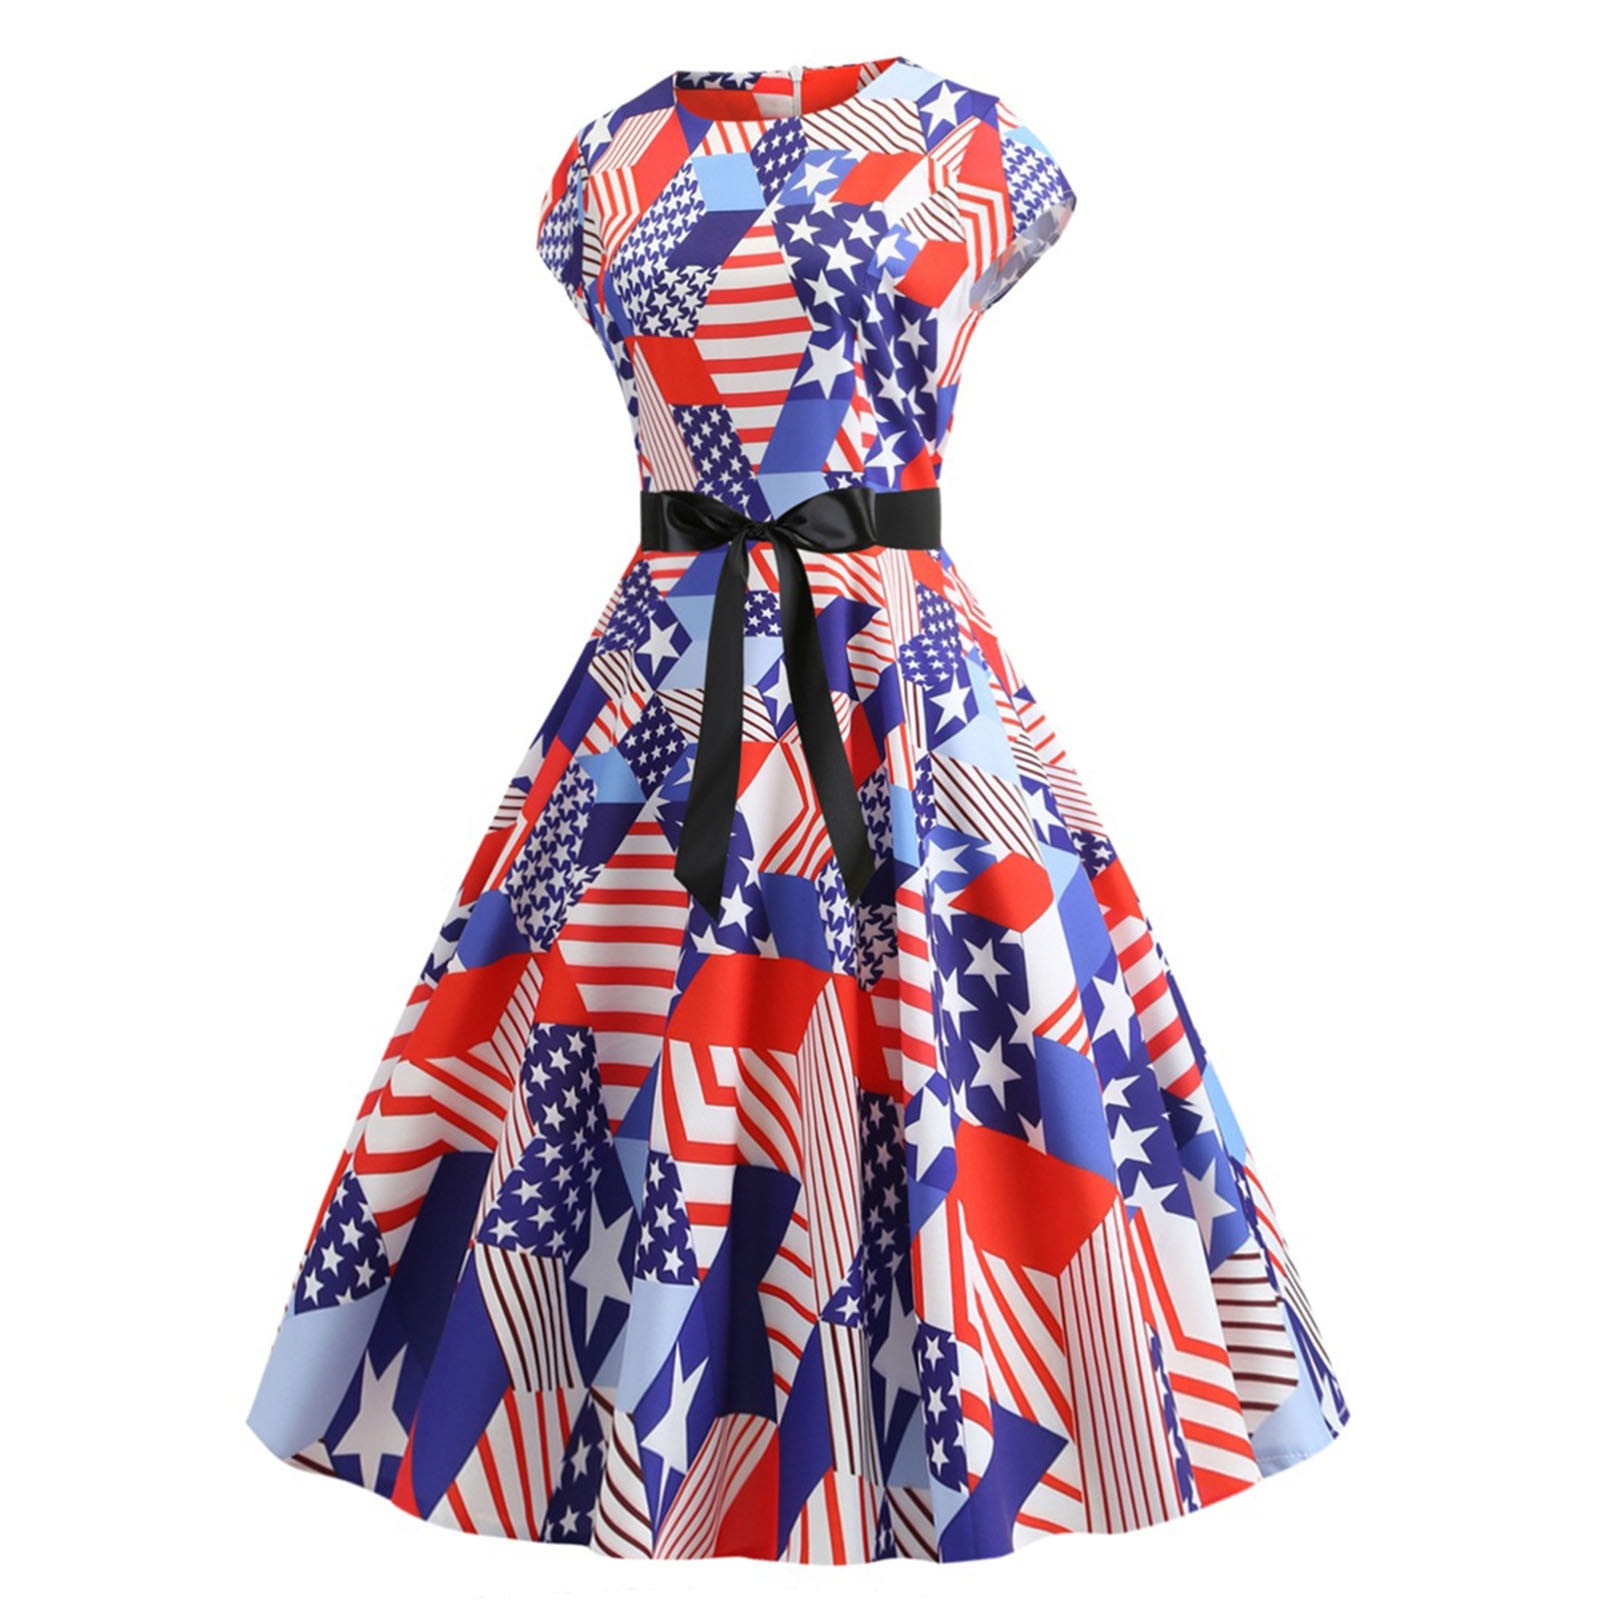 american flag prom dress